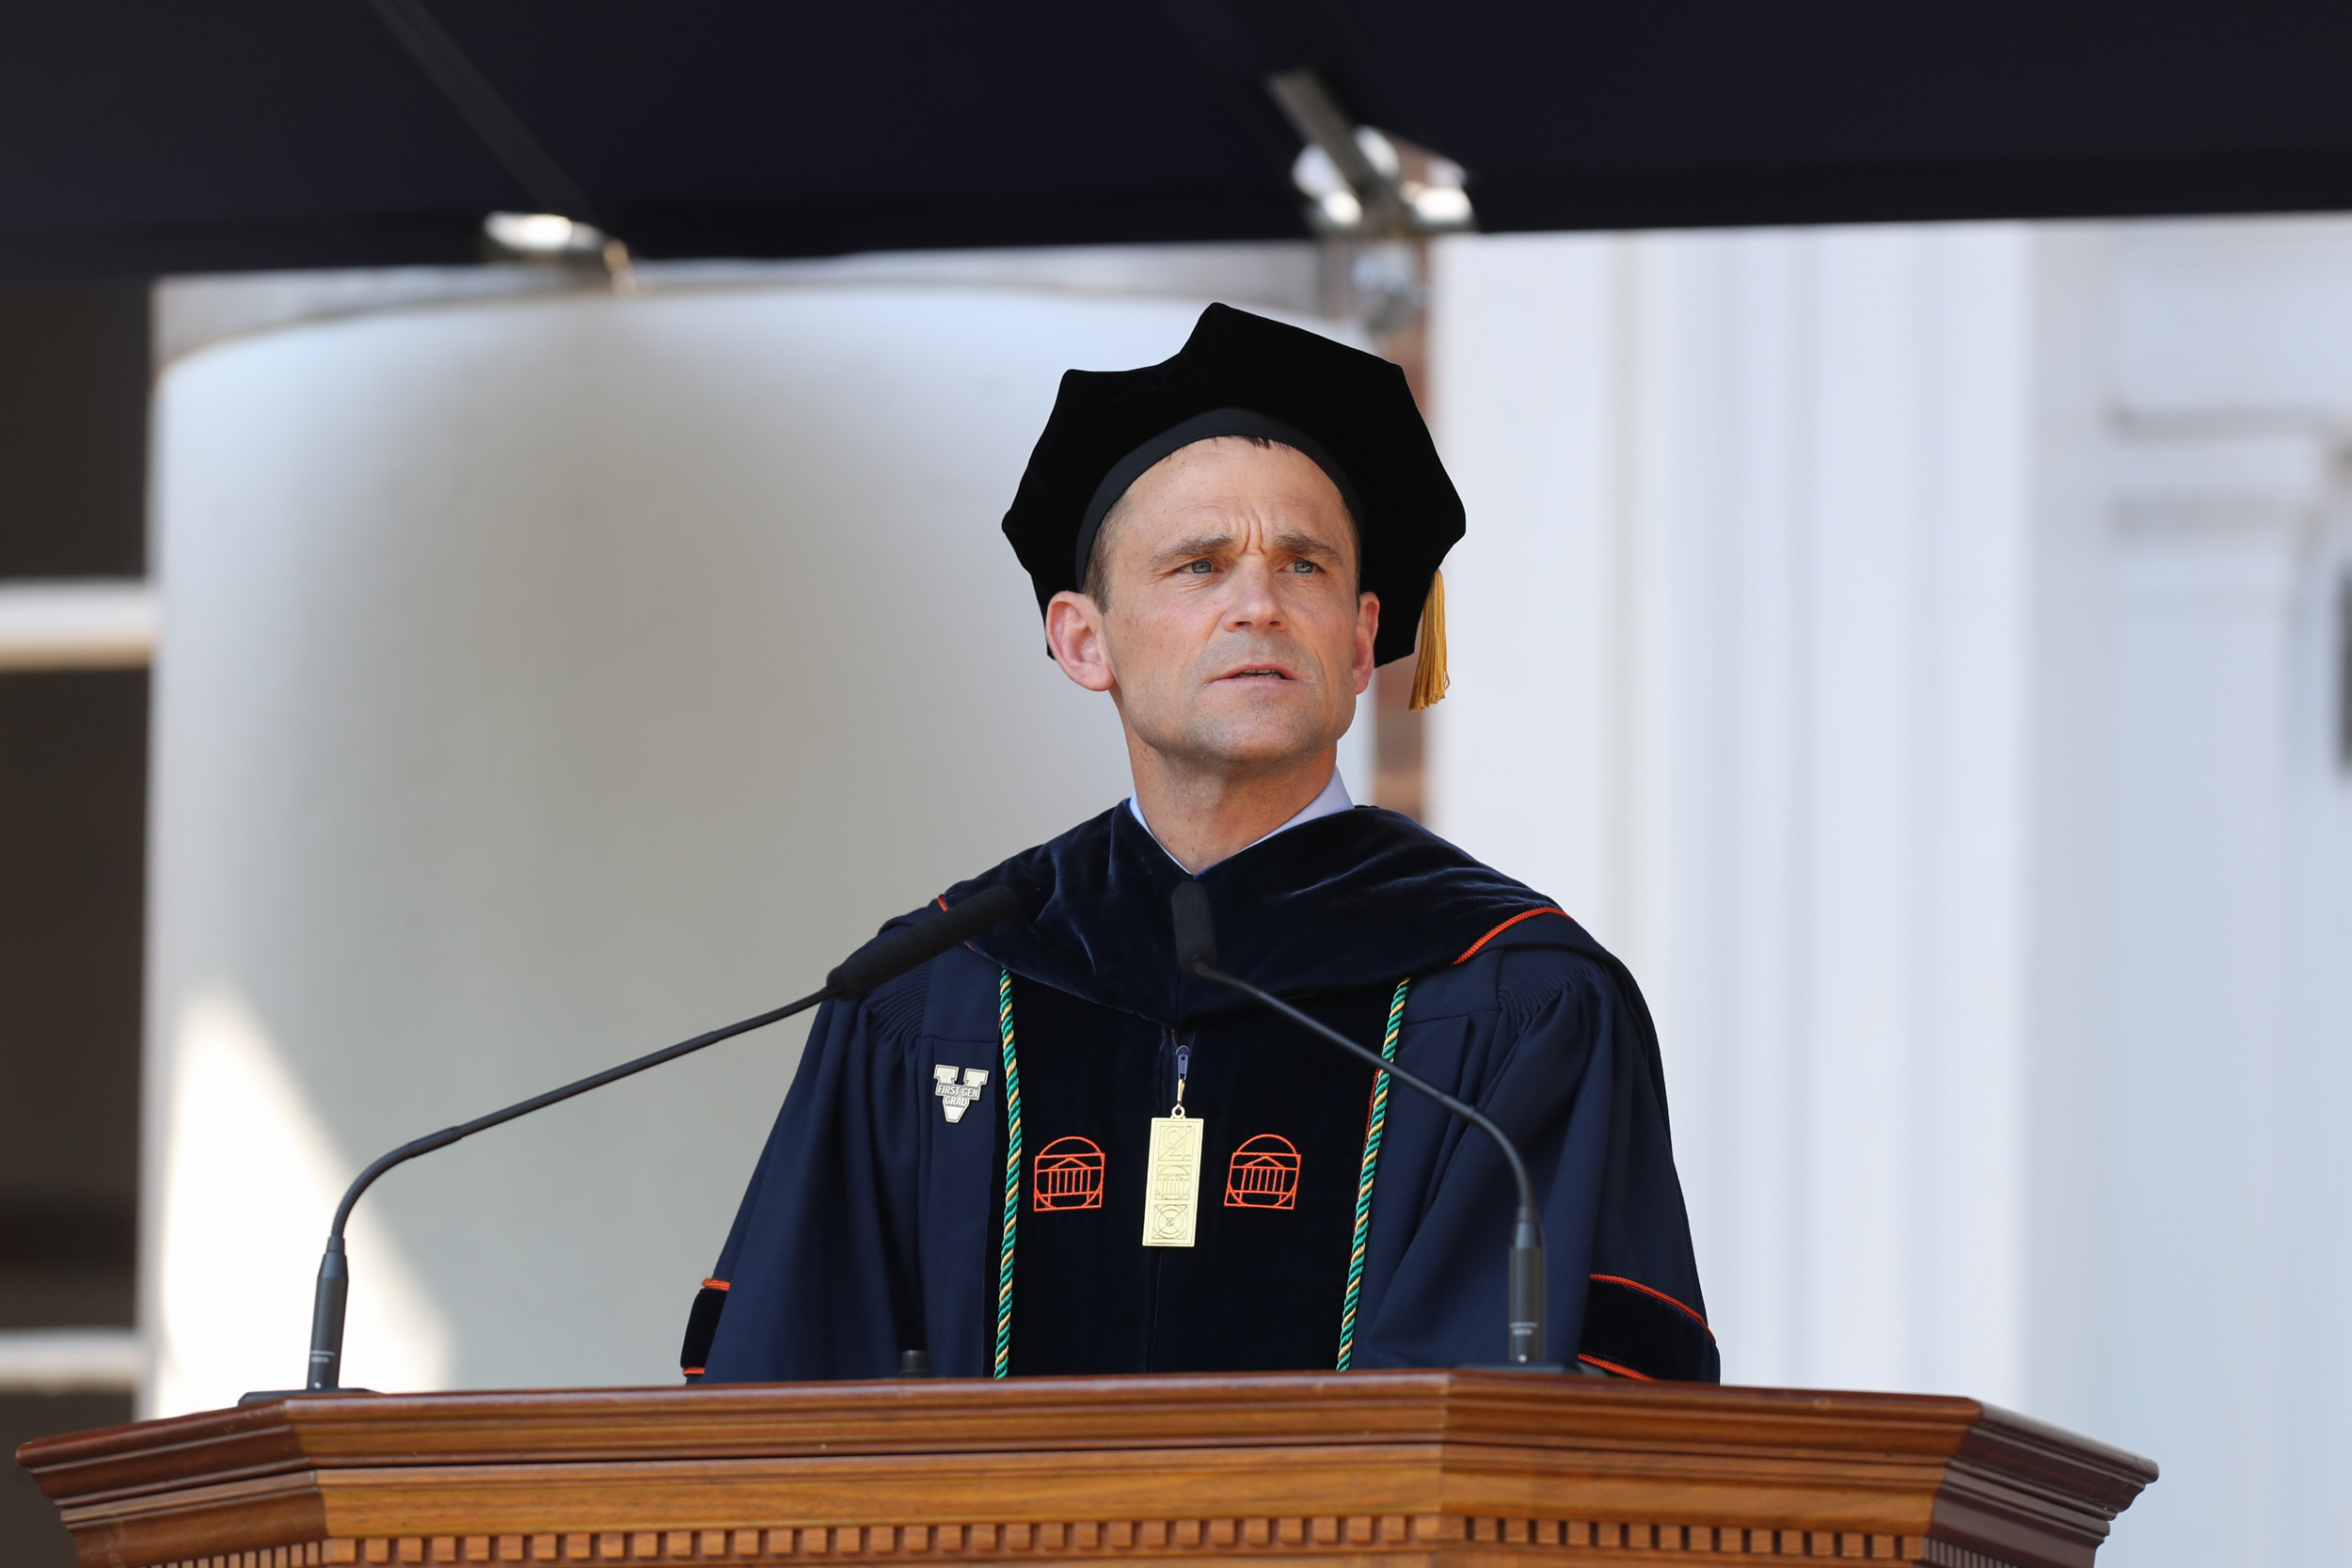 President Jim Ryan talking at a podium during graduation